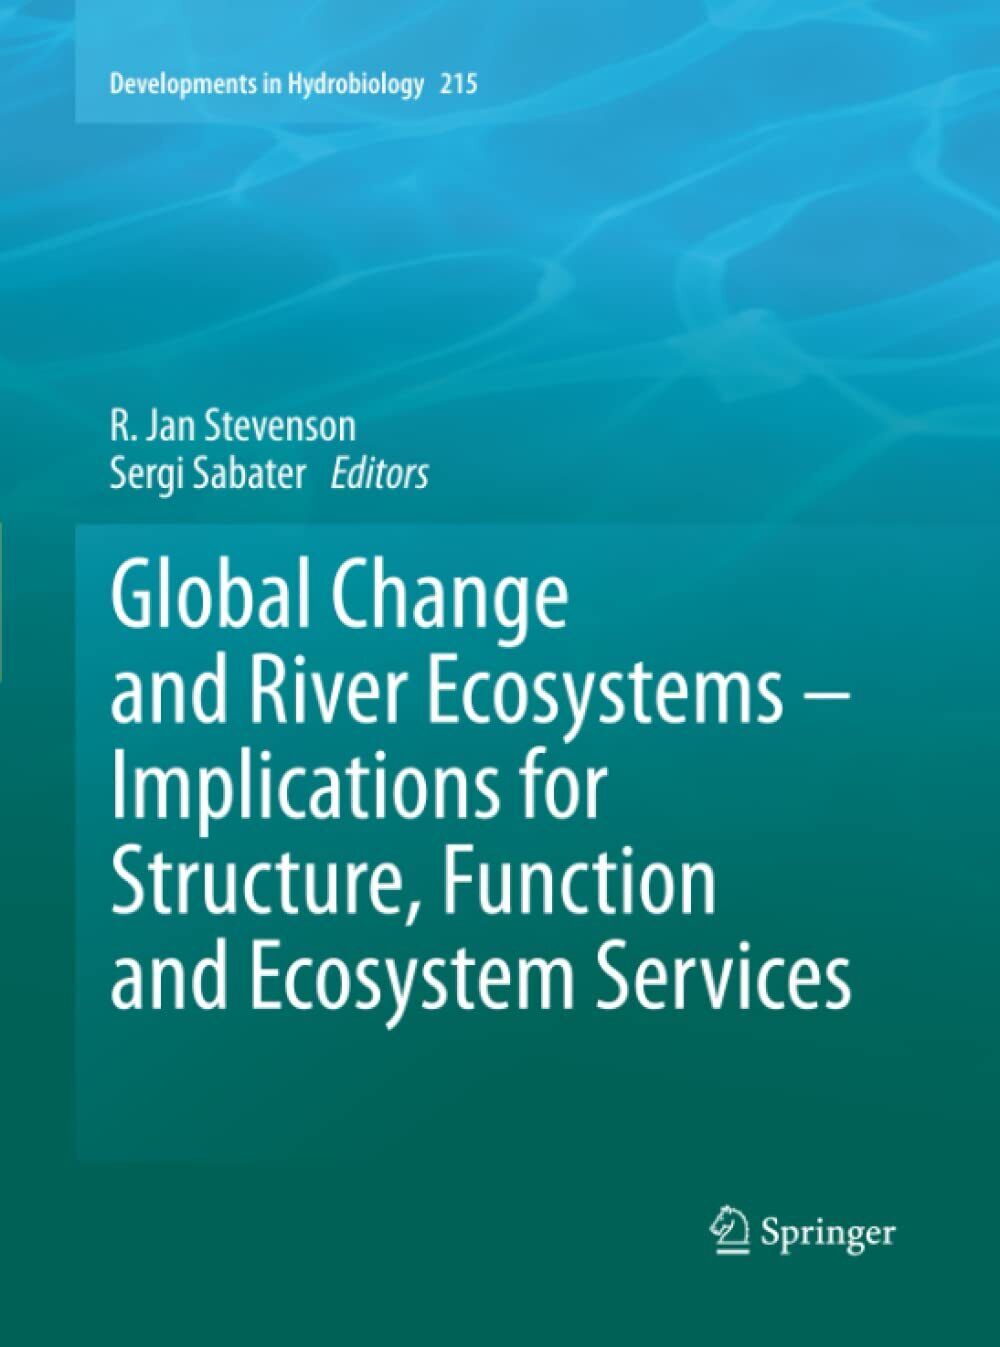 Global Change and River Ecosystems - R. Jan Stevenson - Springer, 2013